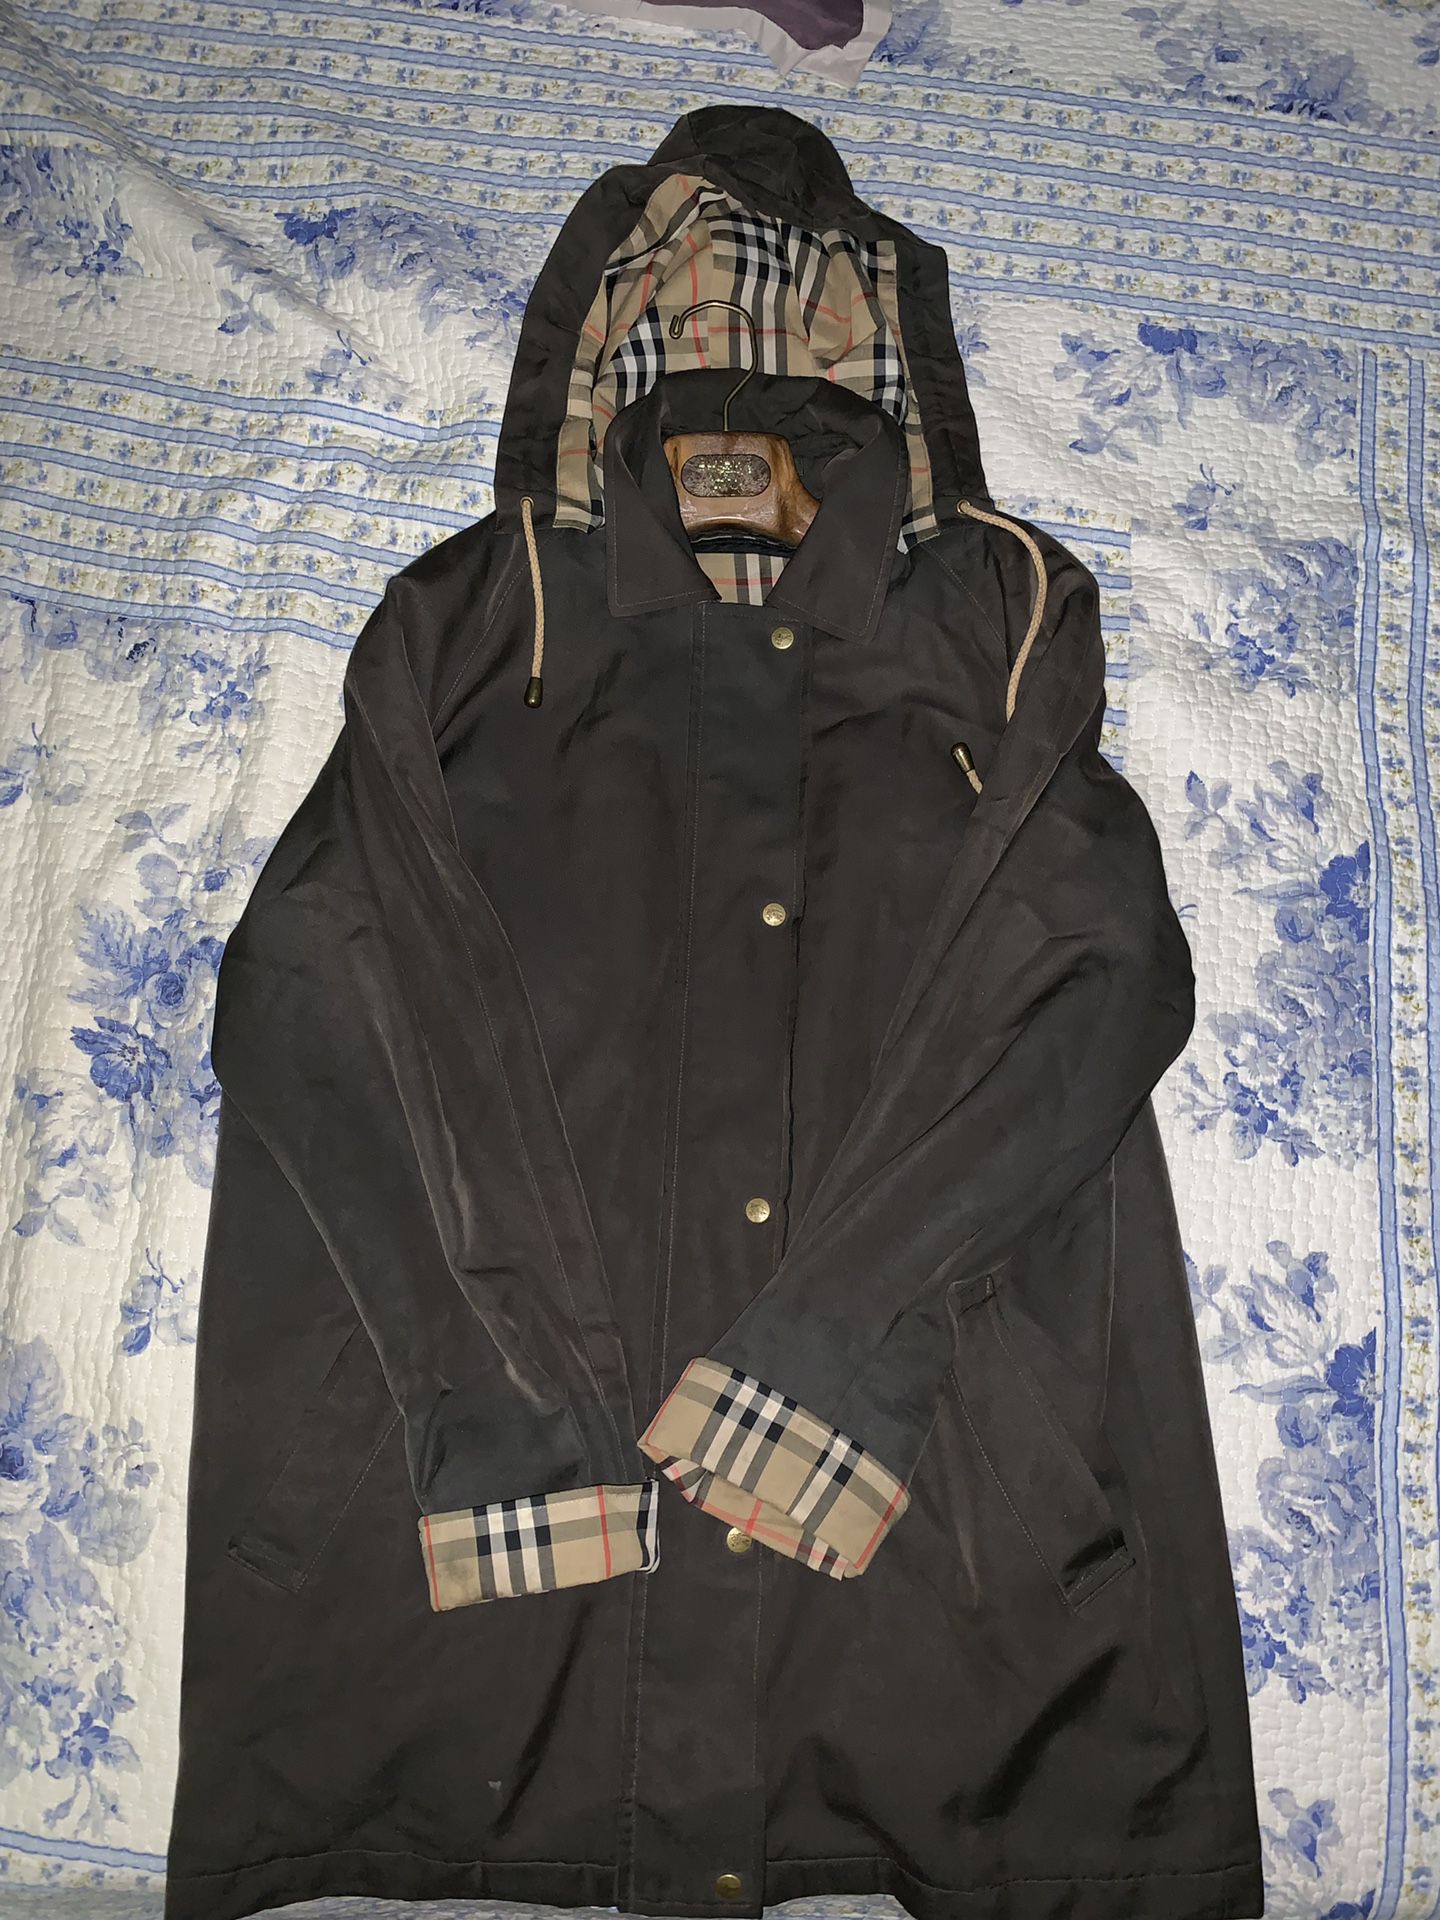 Vintage Burberry Jacket (rare)